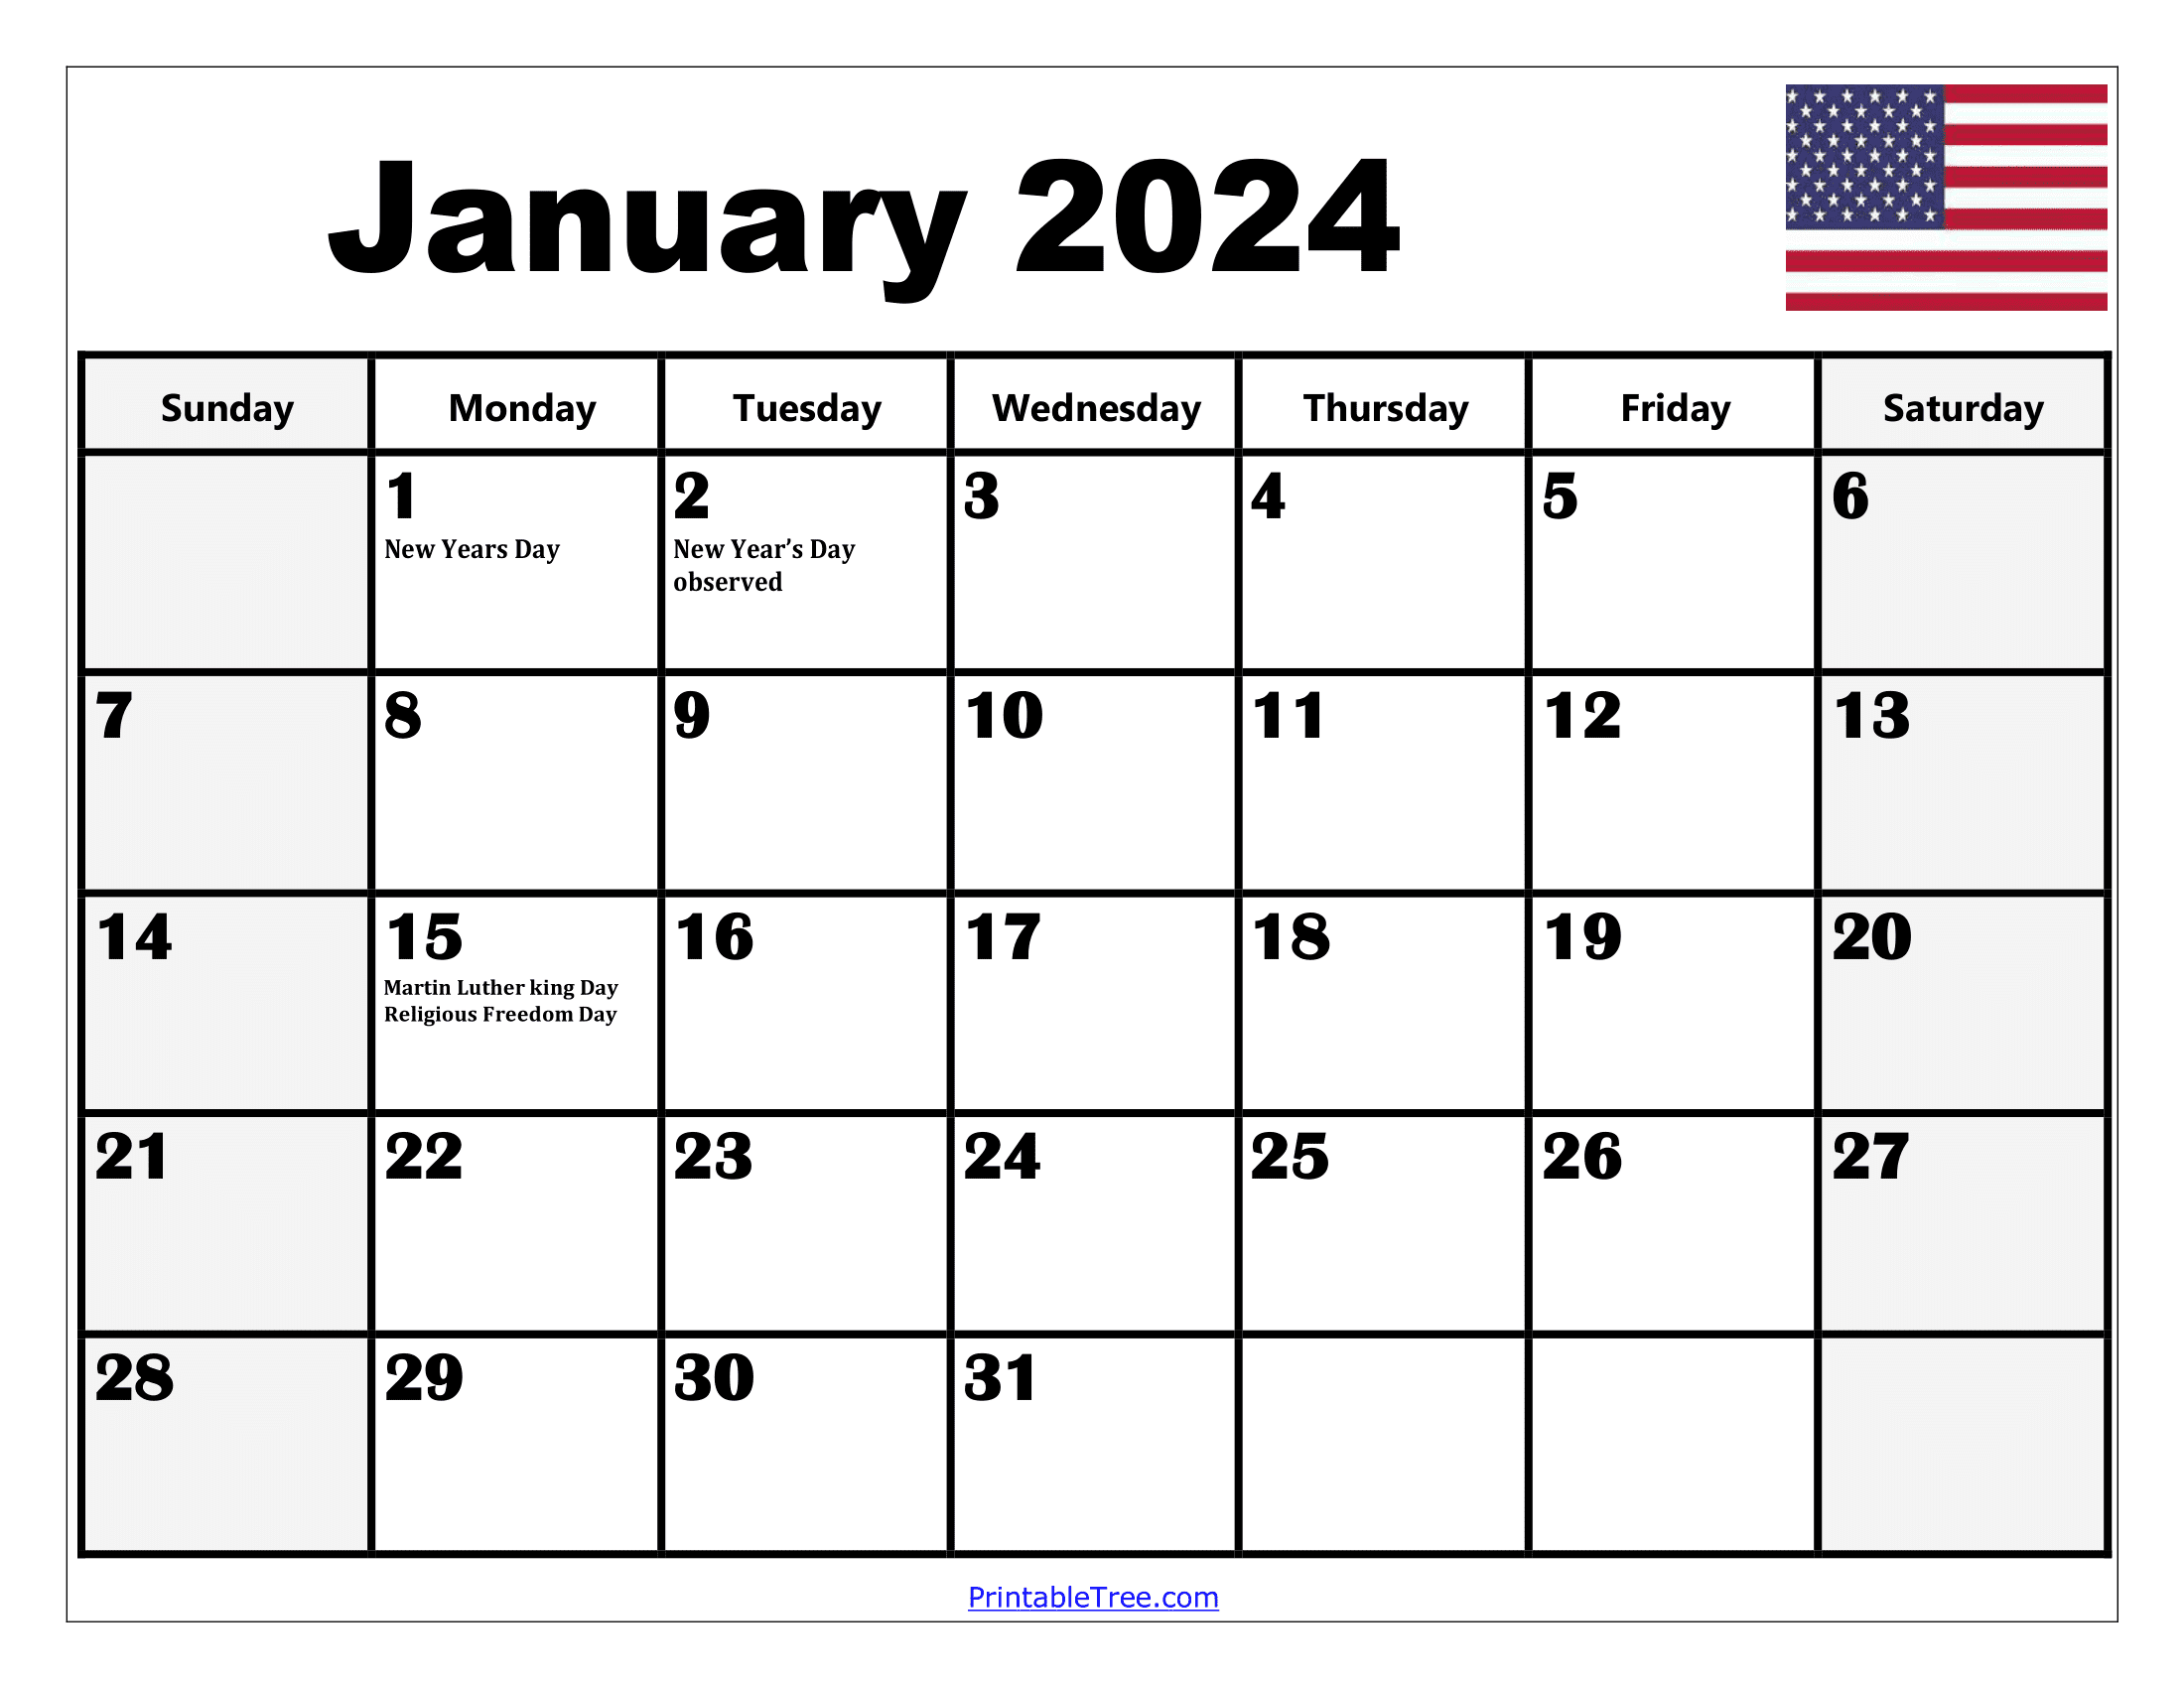 January 2024 Calendar Printable Pdf Template With Holidays for 2024 Printable Calendar By Month With Holidays